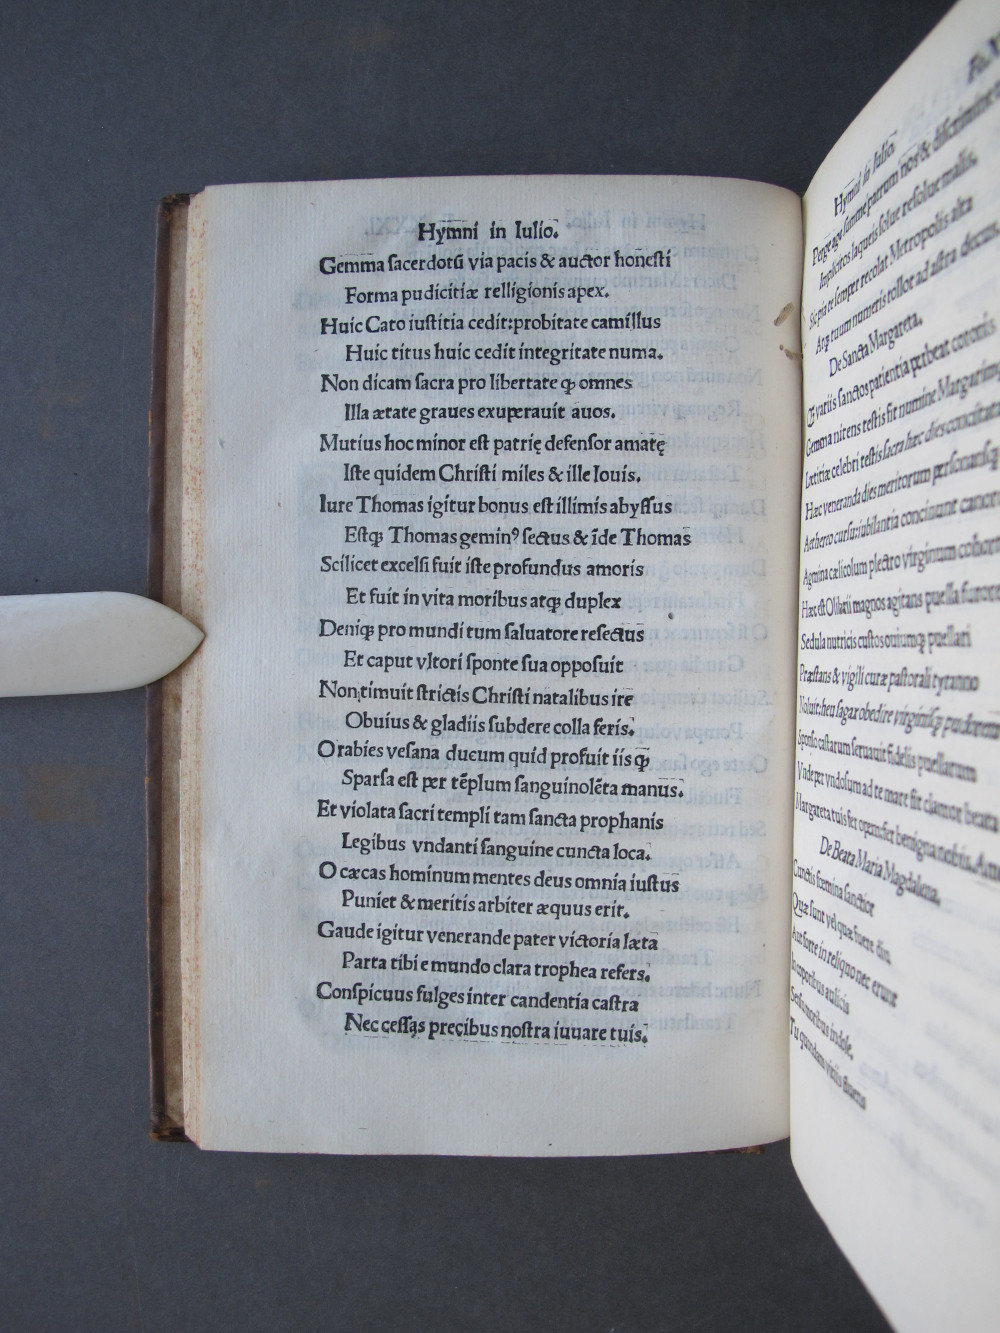 Folio 31 verso